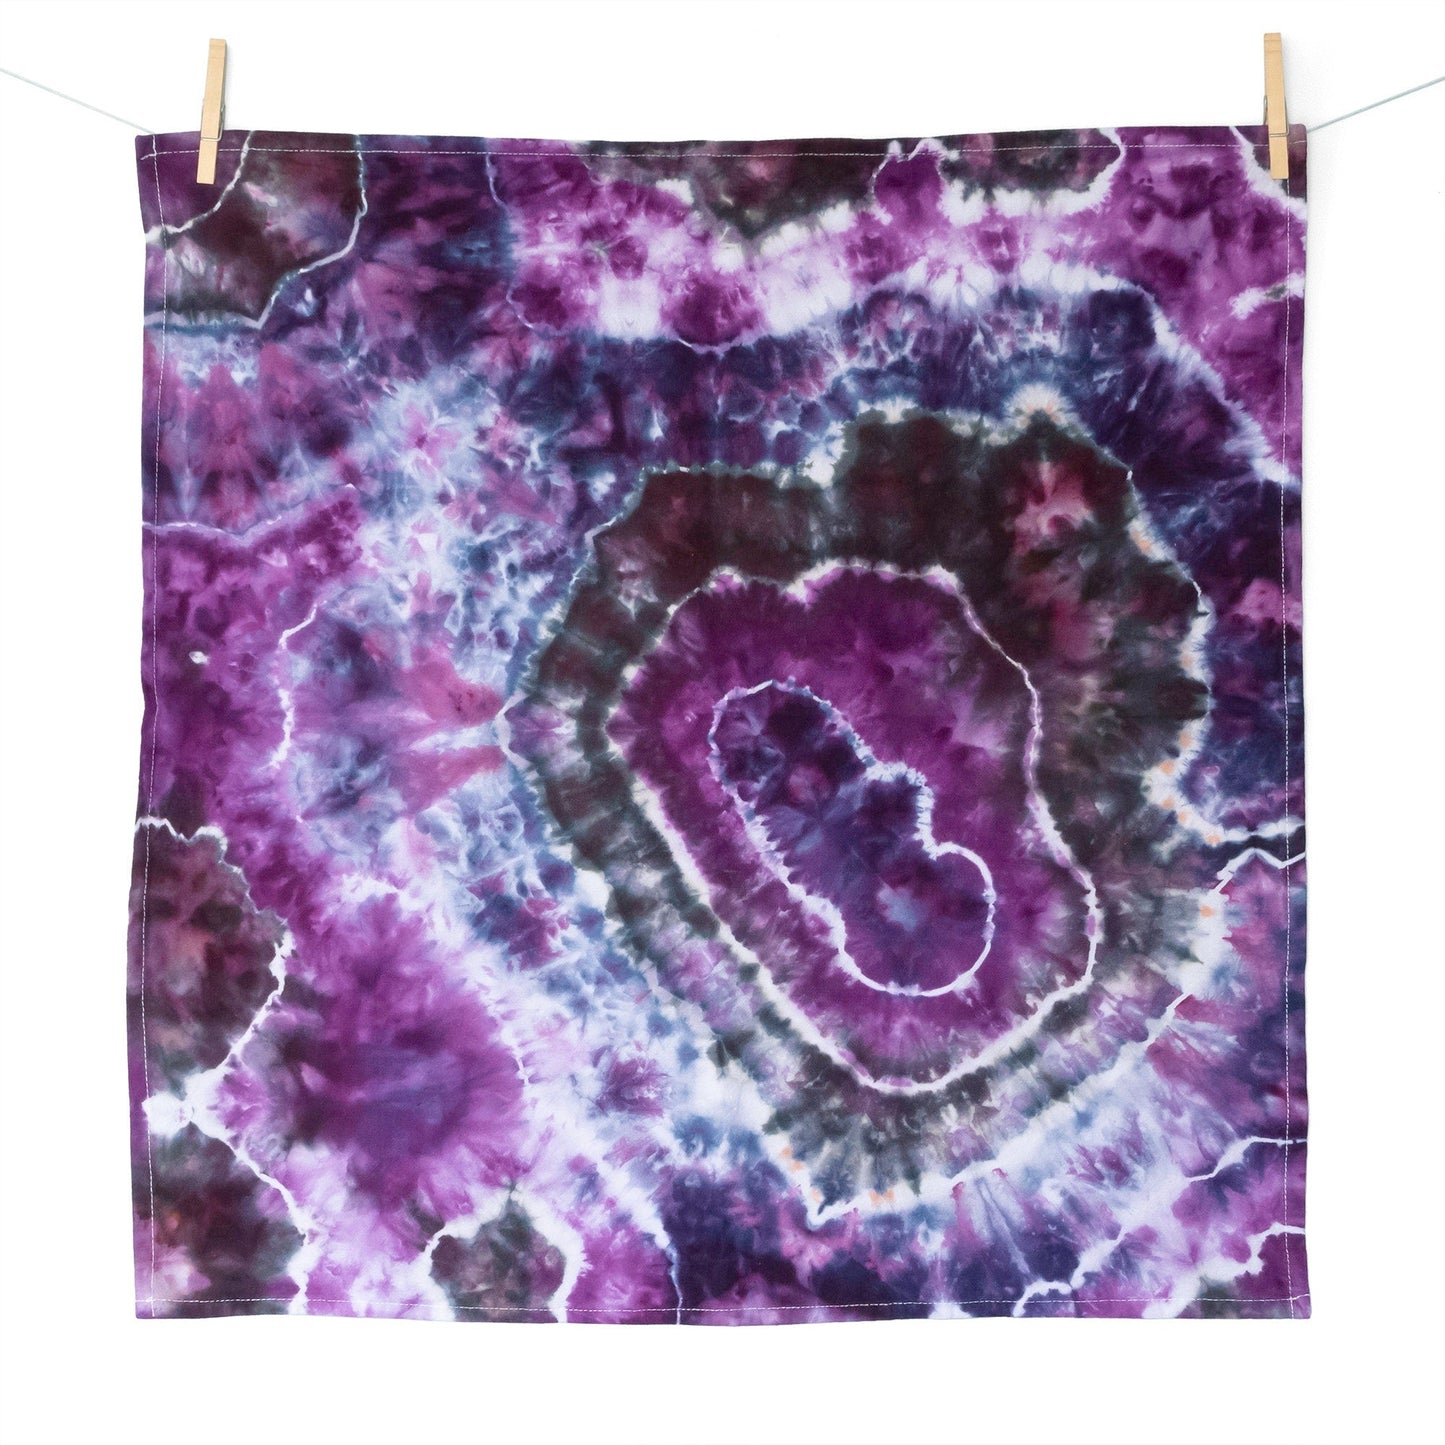 Purple Tie Dye Flour Sack Tea Towels - Sherri O Designs